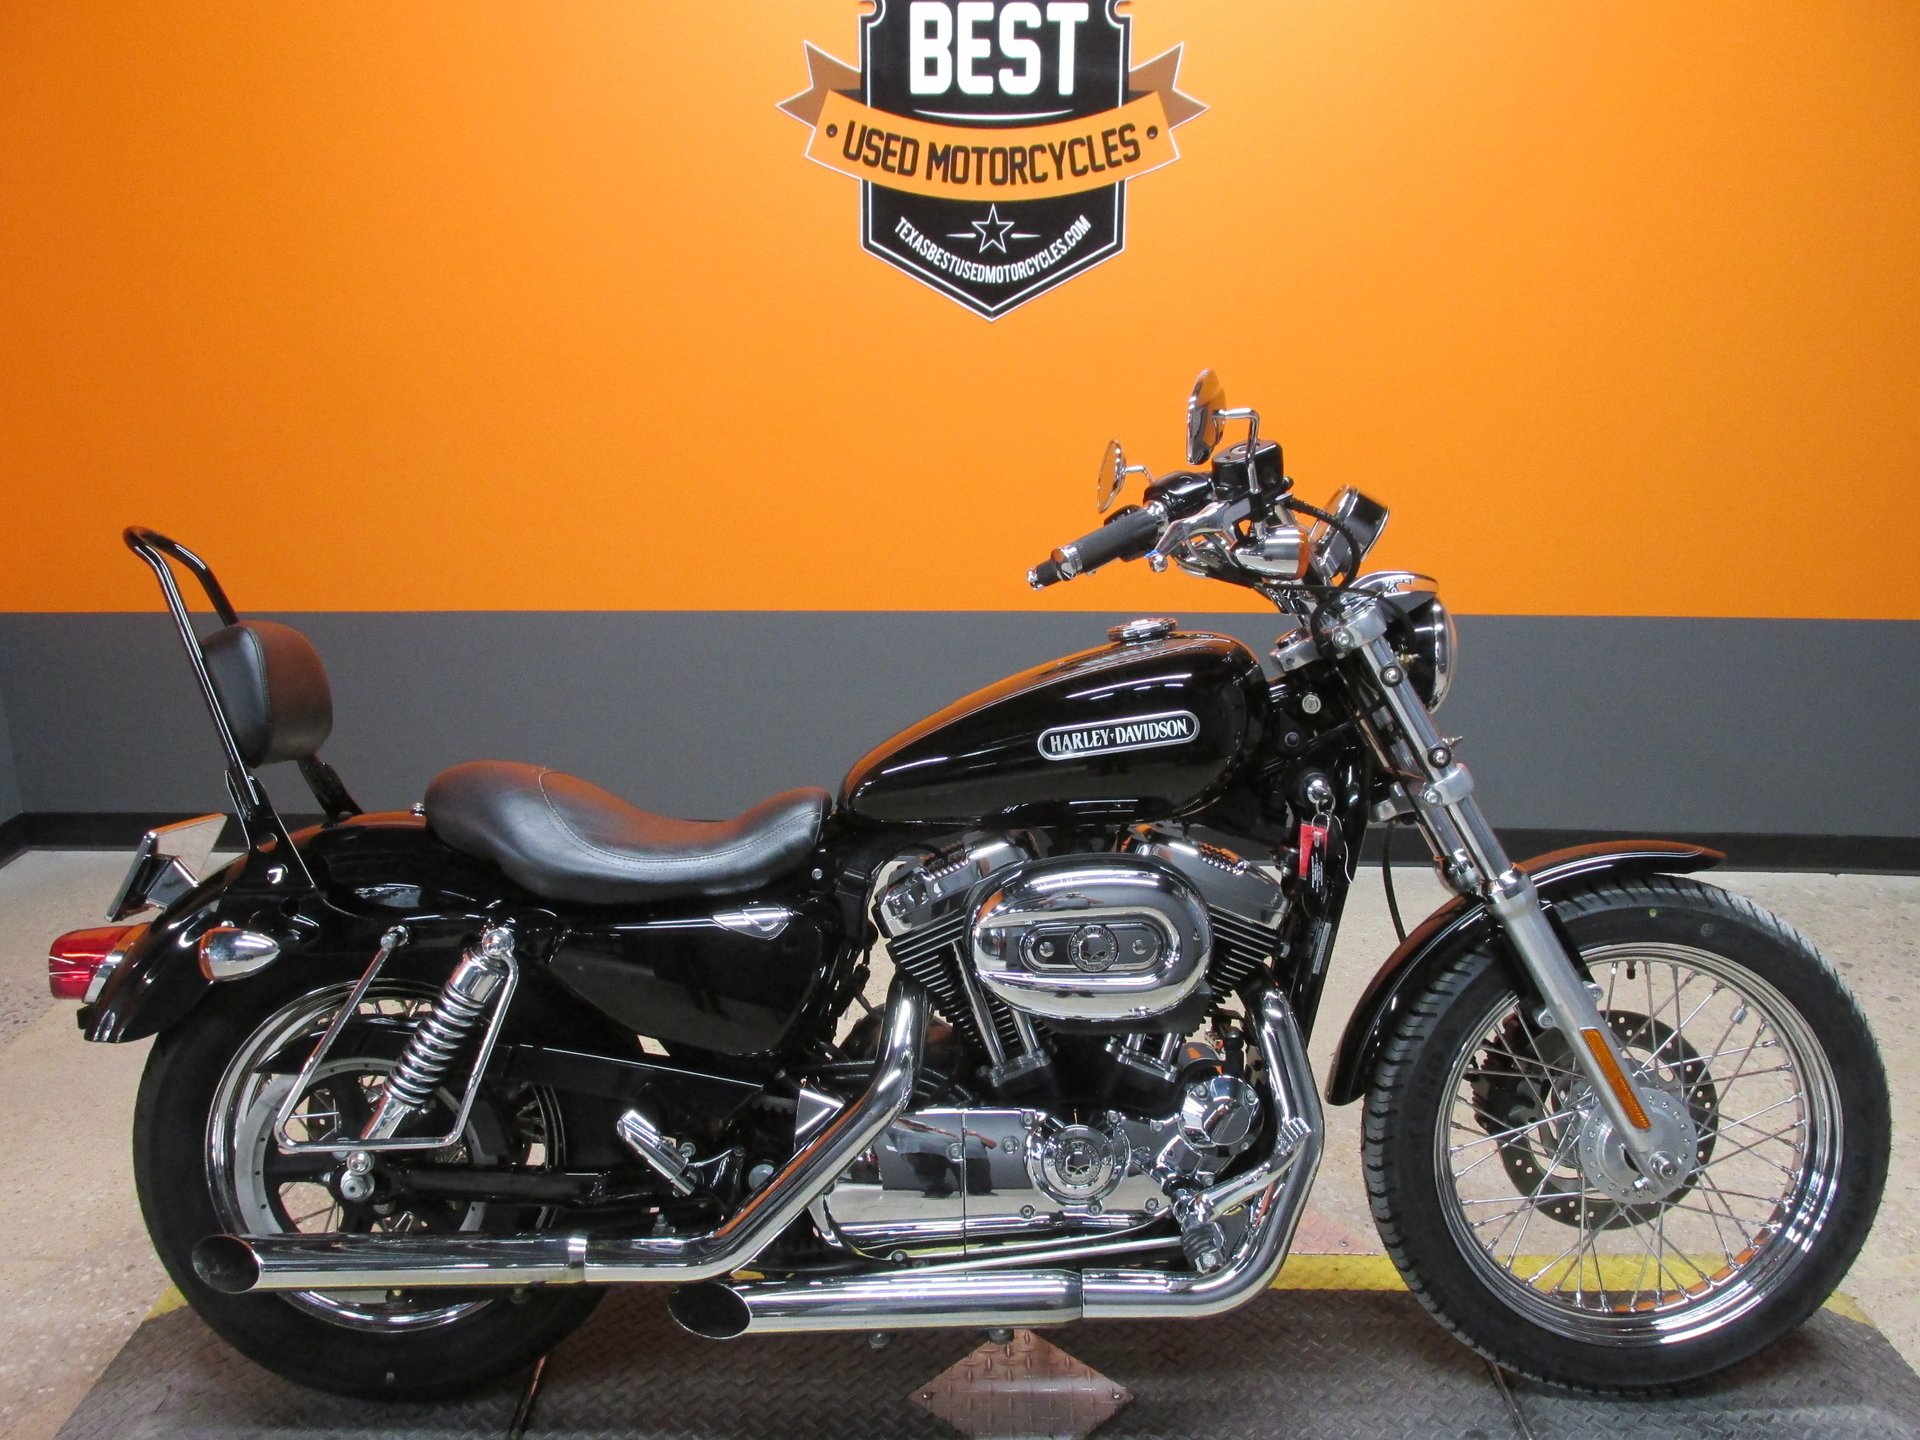 2007 Harley-Davidson Sportster 1200 | American Motorcycle Trading Company -  Used Harley Davidson Motorcycles